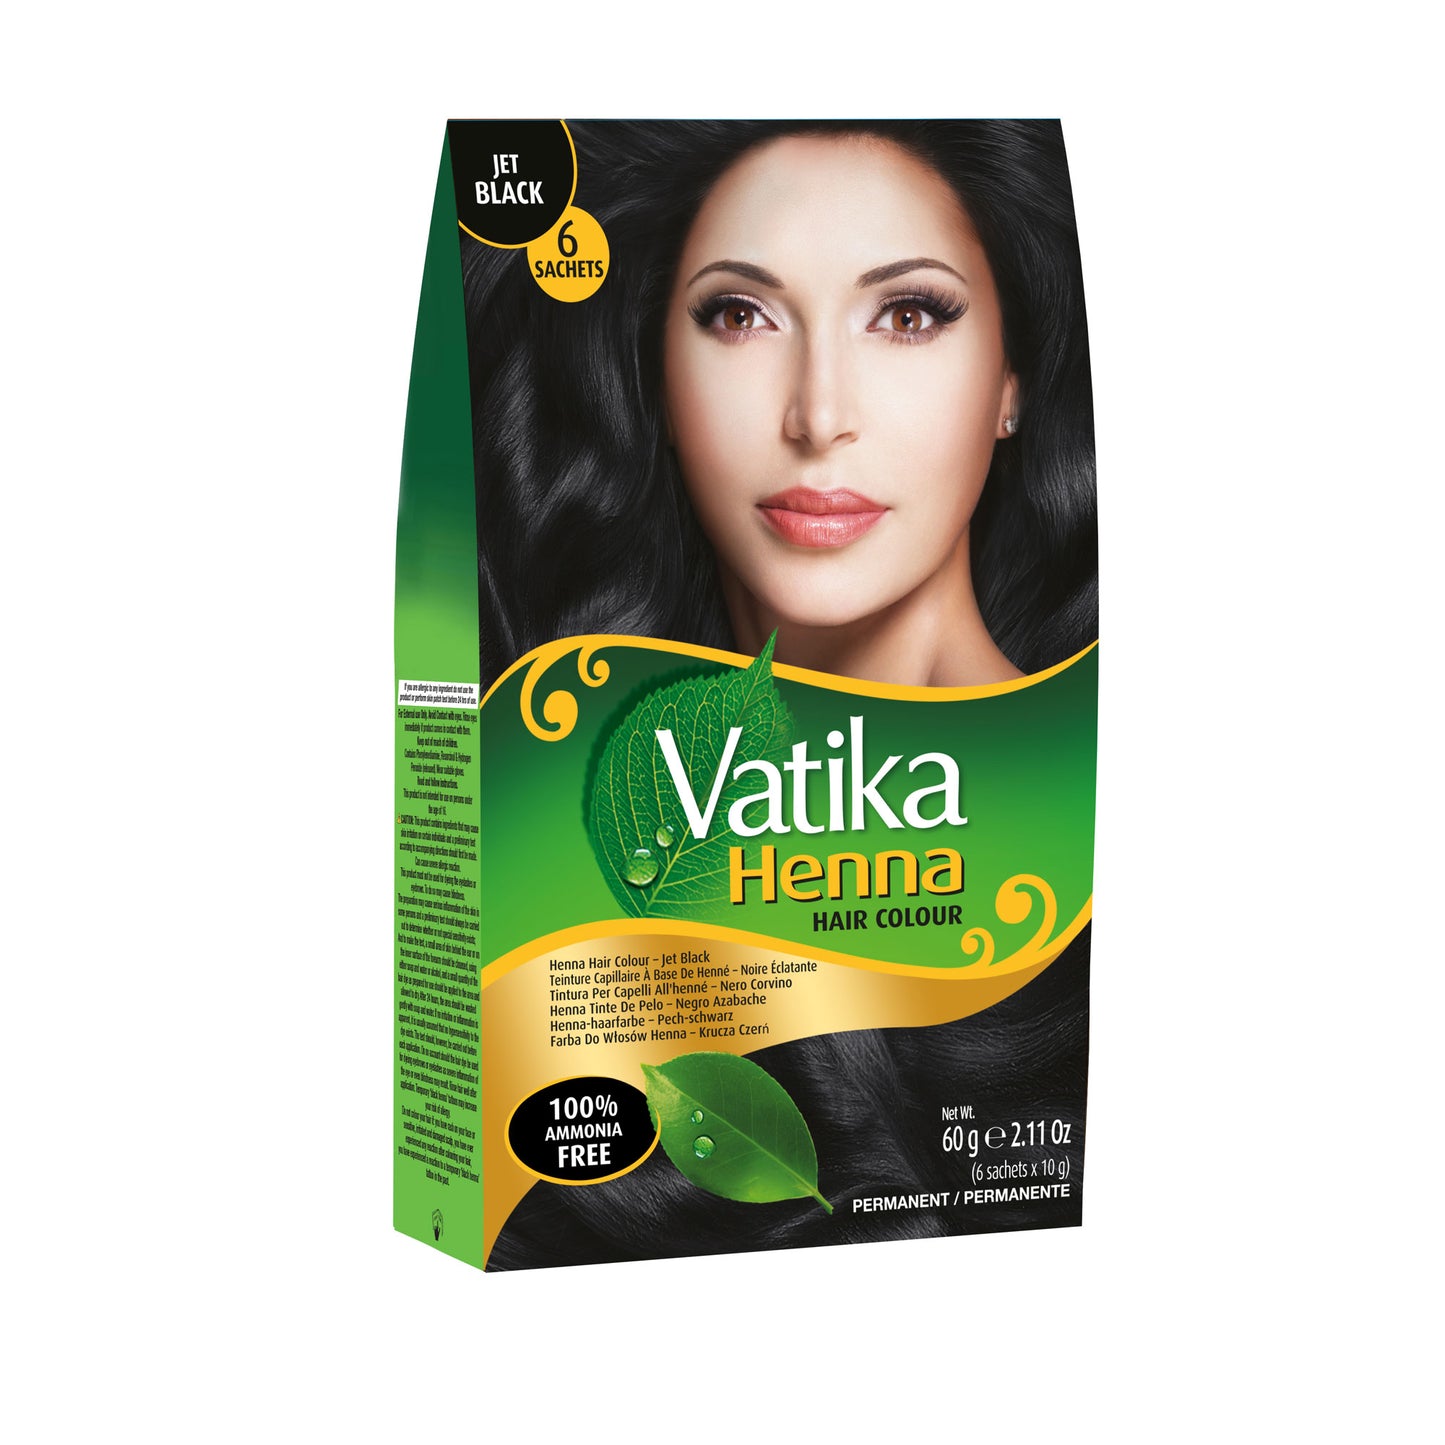 Vatika Henna Hair Colour - Jet Black 10g-UK-New